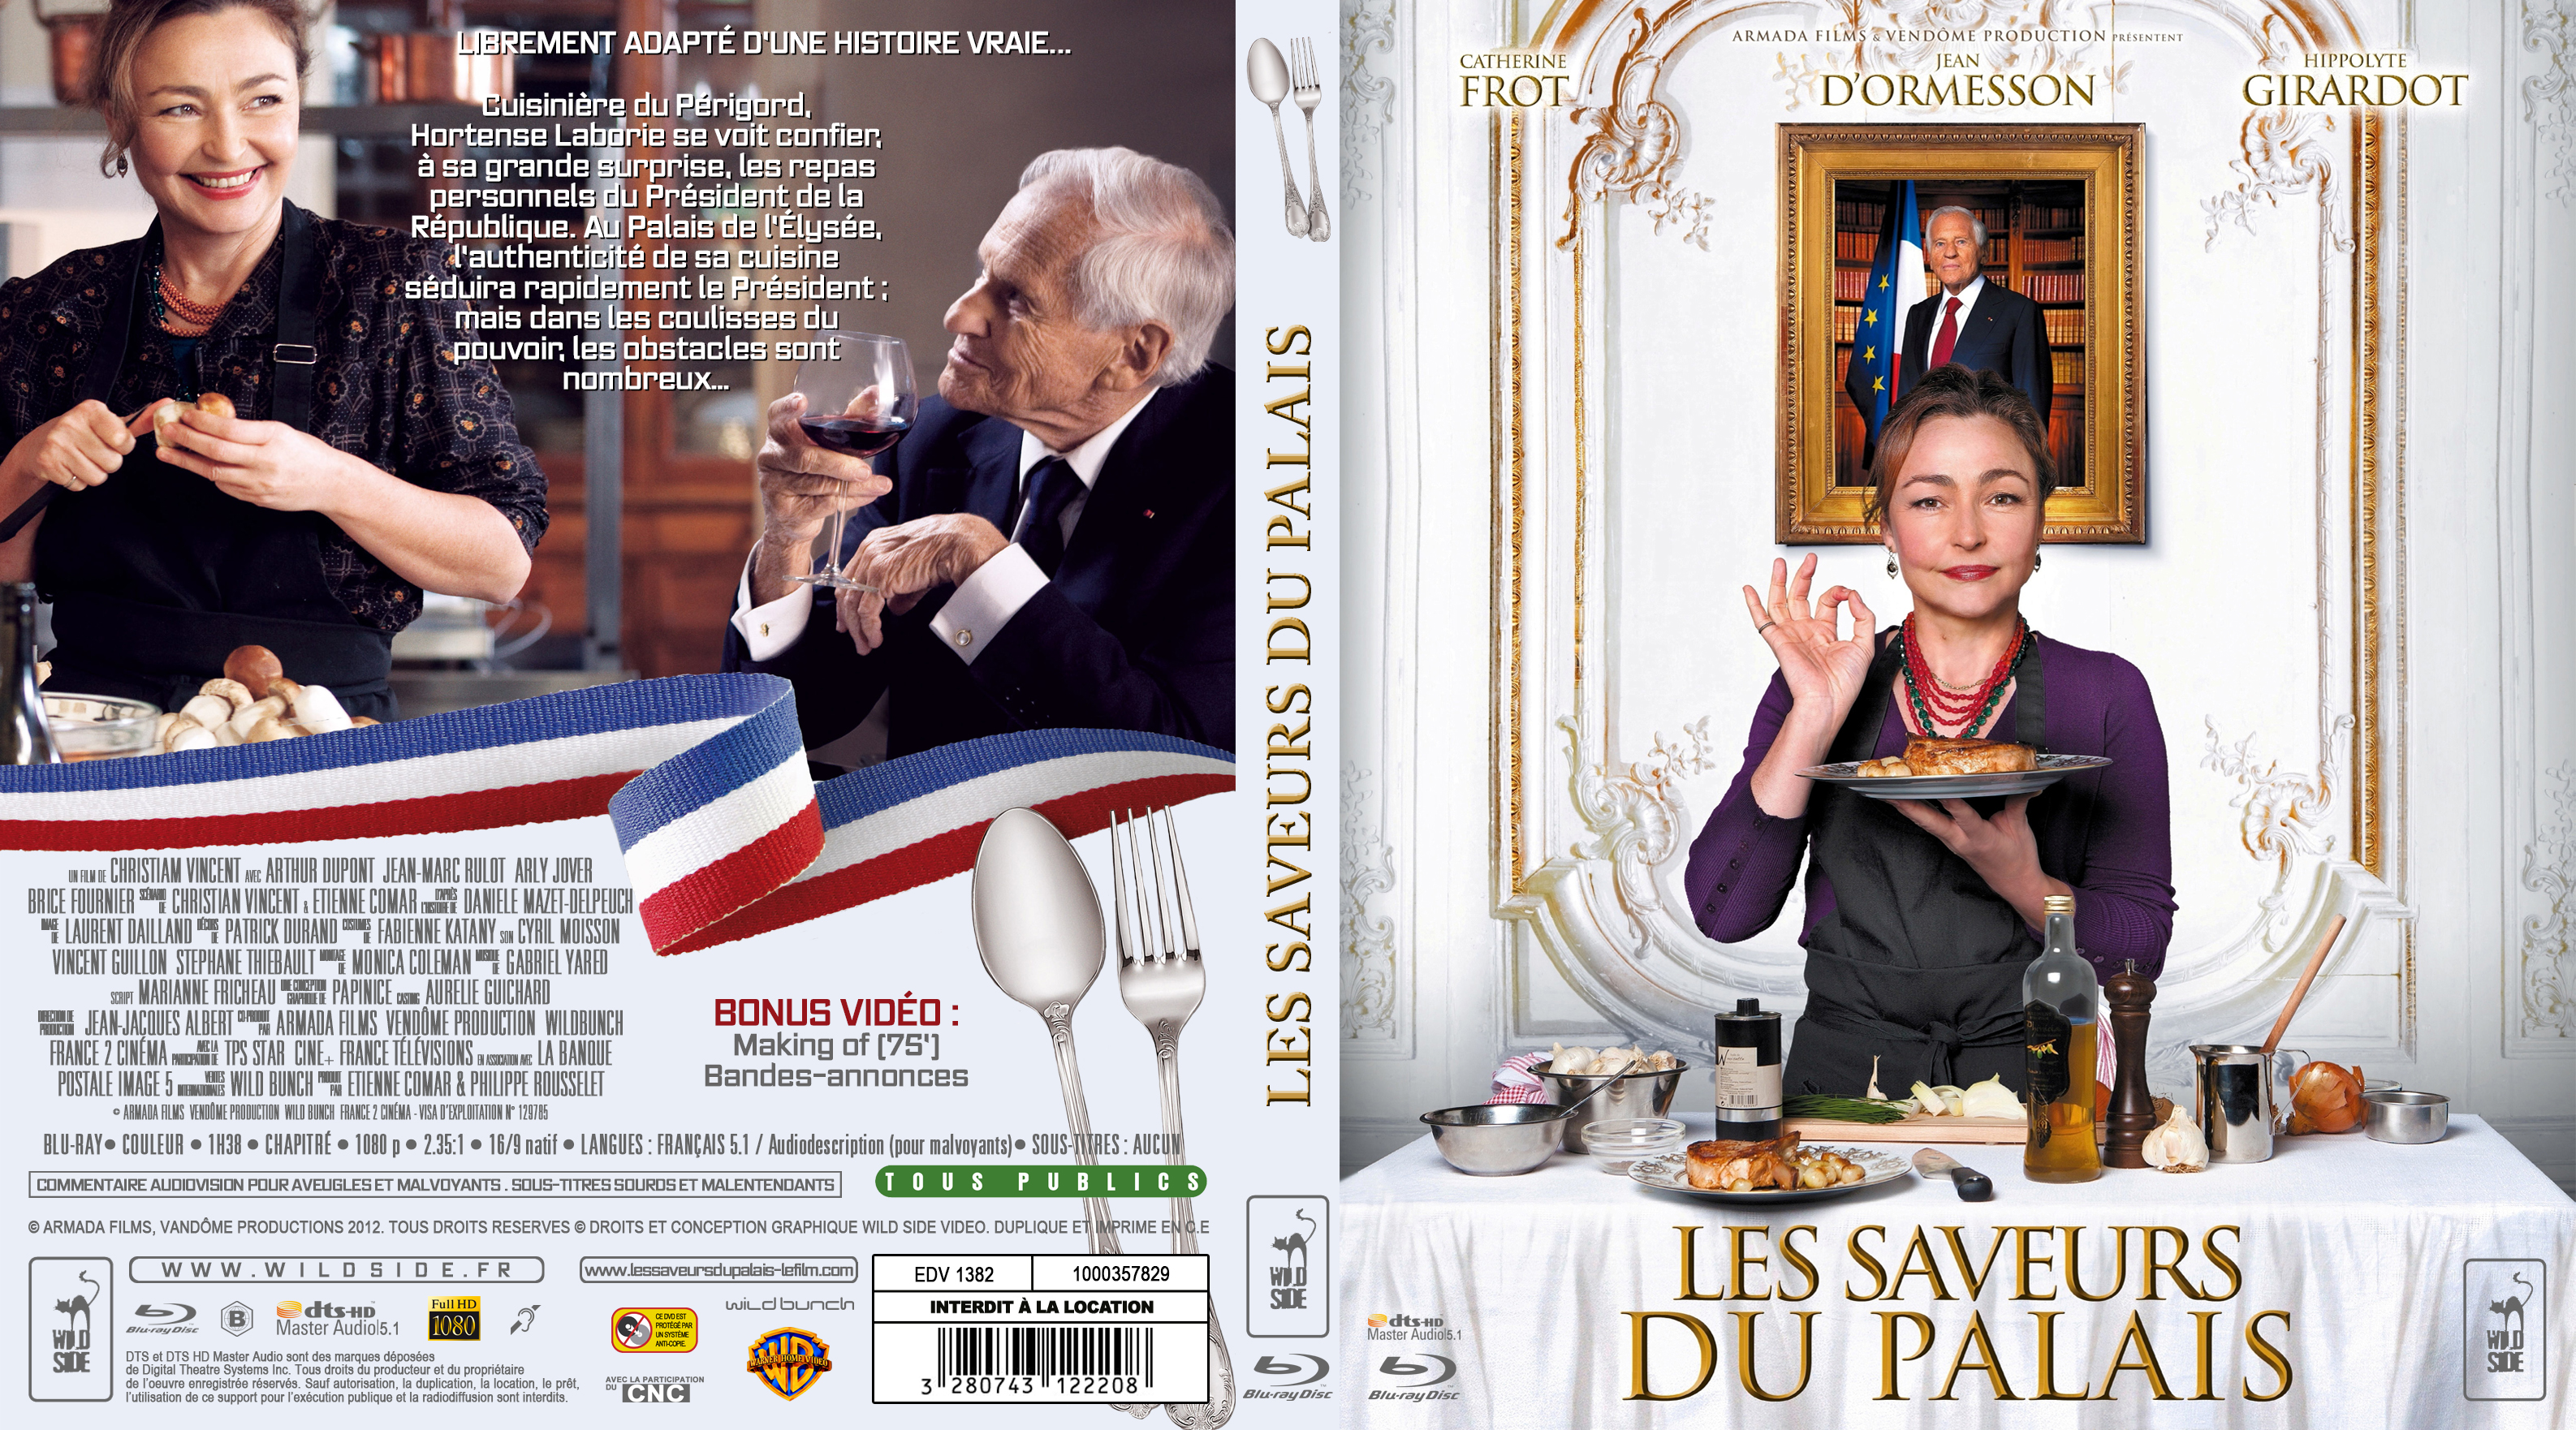 Jaquette DVD Les Saveurs du palais custom (BLU-RAY)